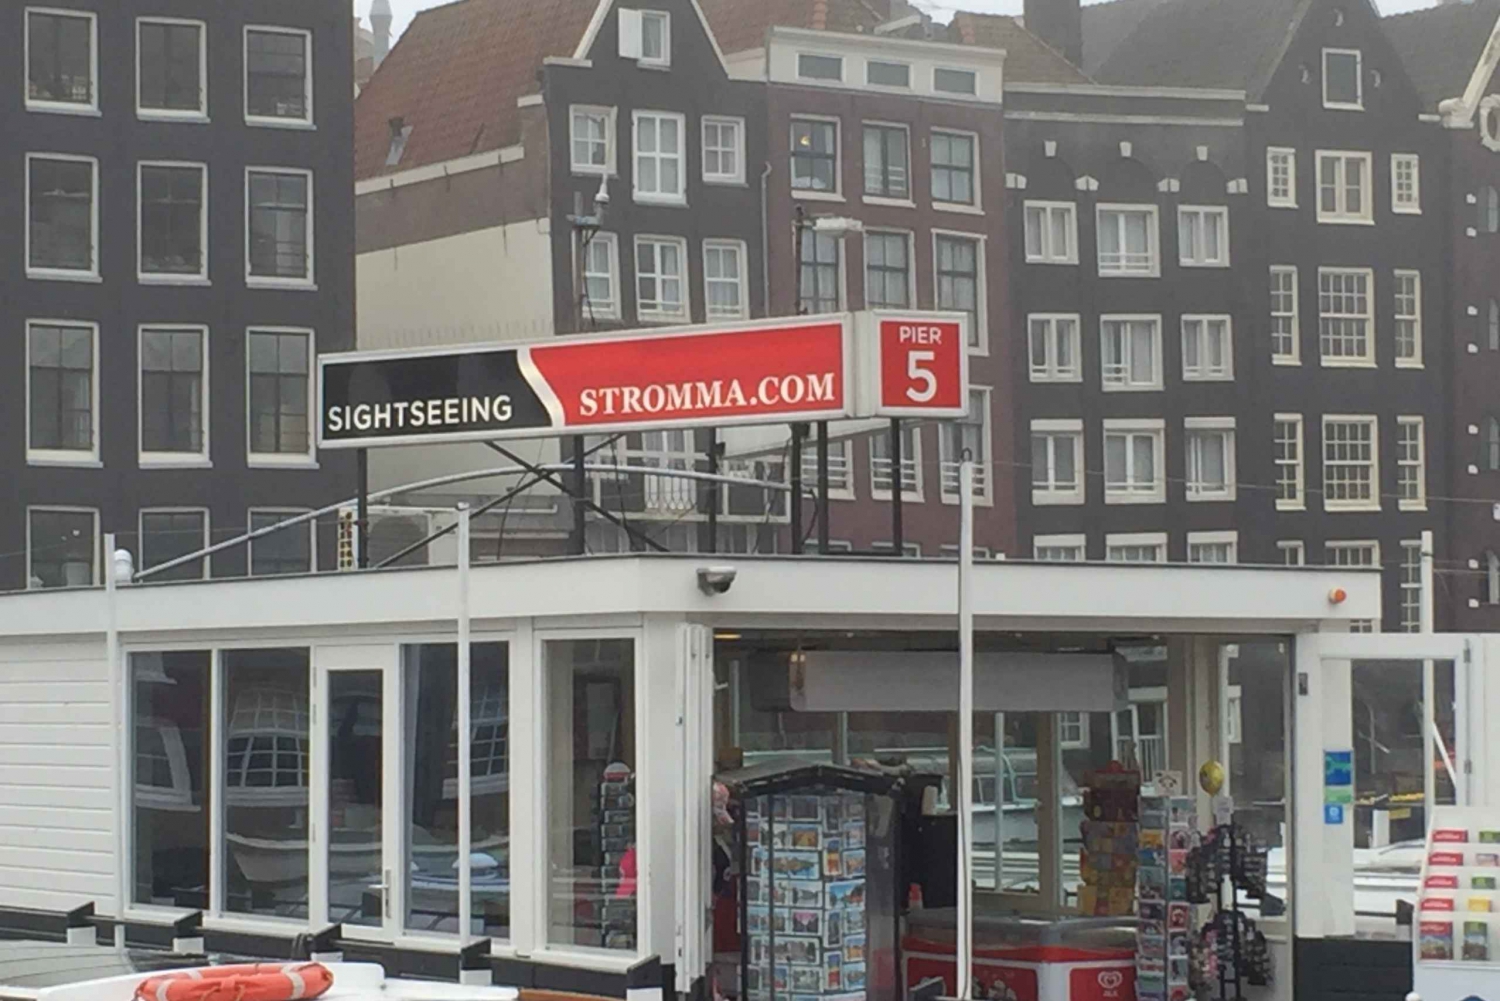 Amsterdam self-guided walking tour & scavenger hunt